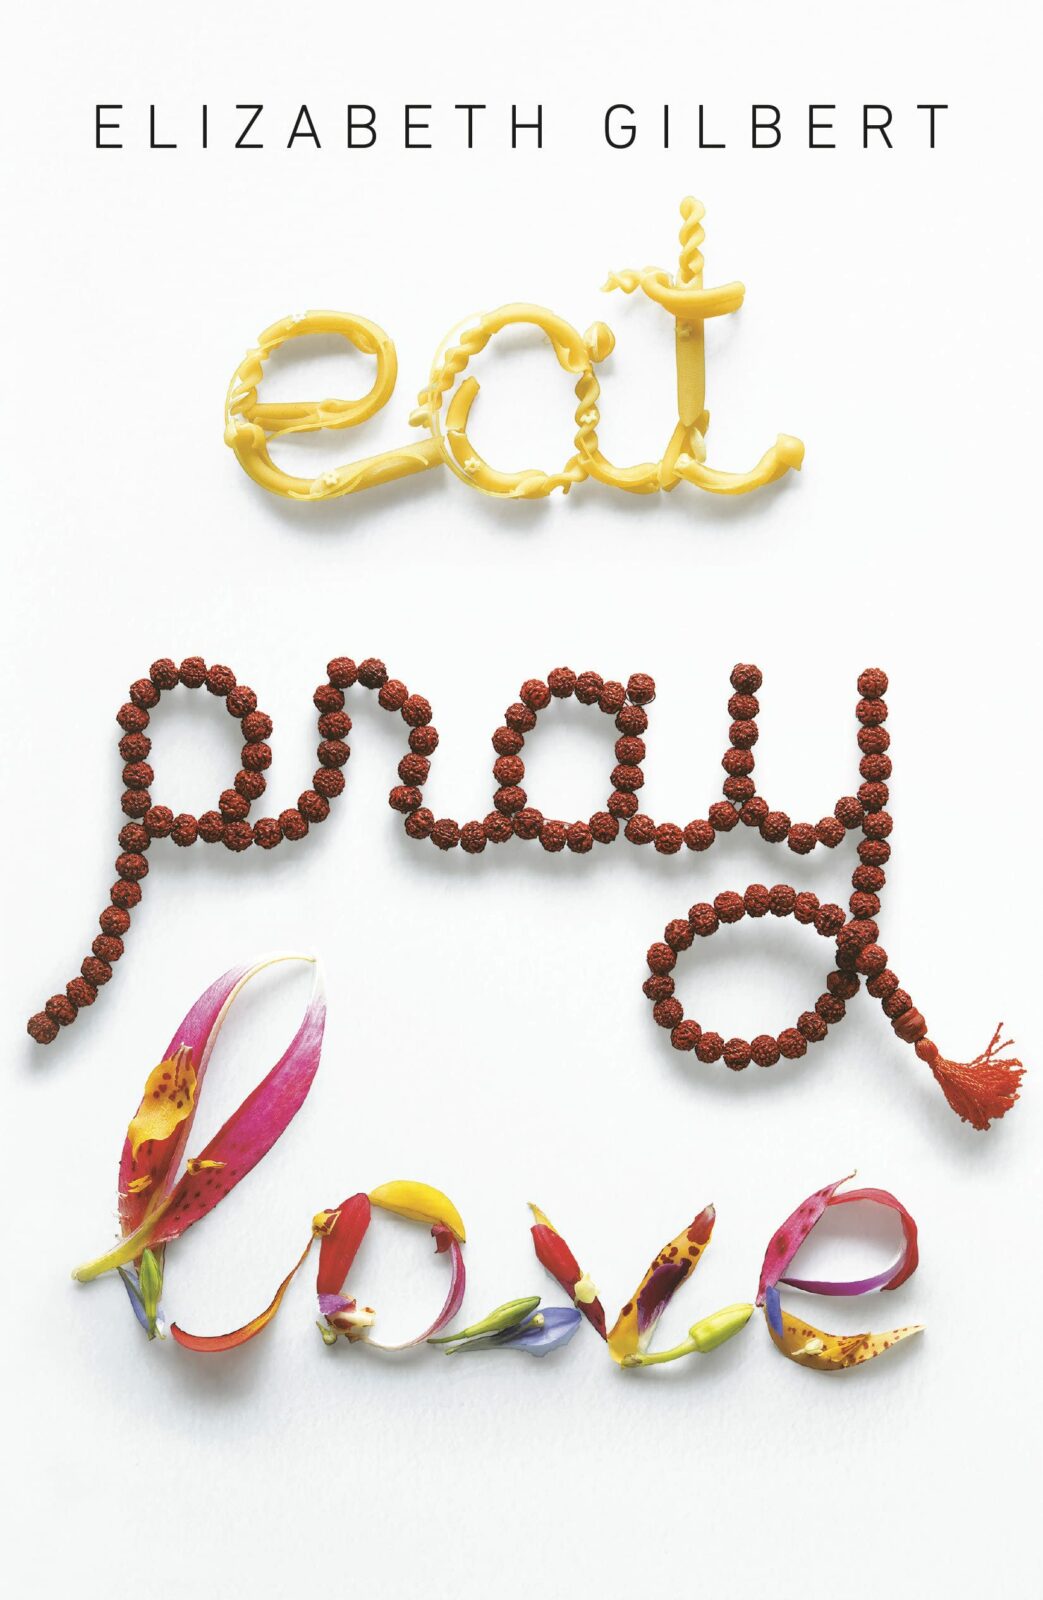 Eat Pray Love, the famous travel memoir by Elizabeth Gilbert